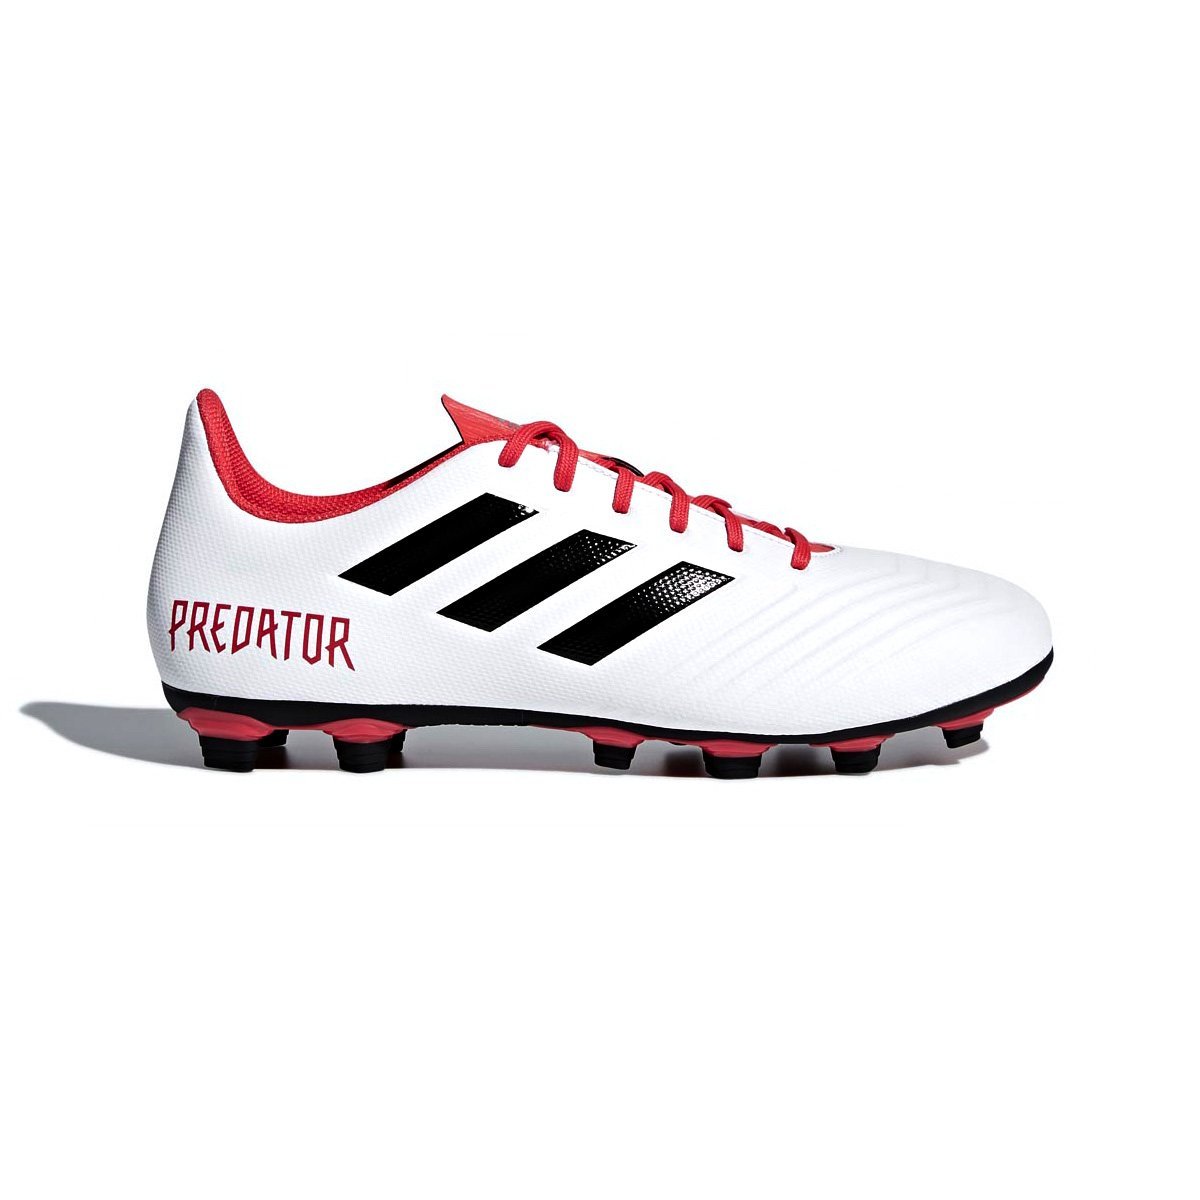 Calzado Soccer Predator 18.4 Fxg Adidas - Caballero